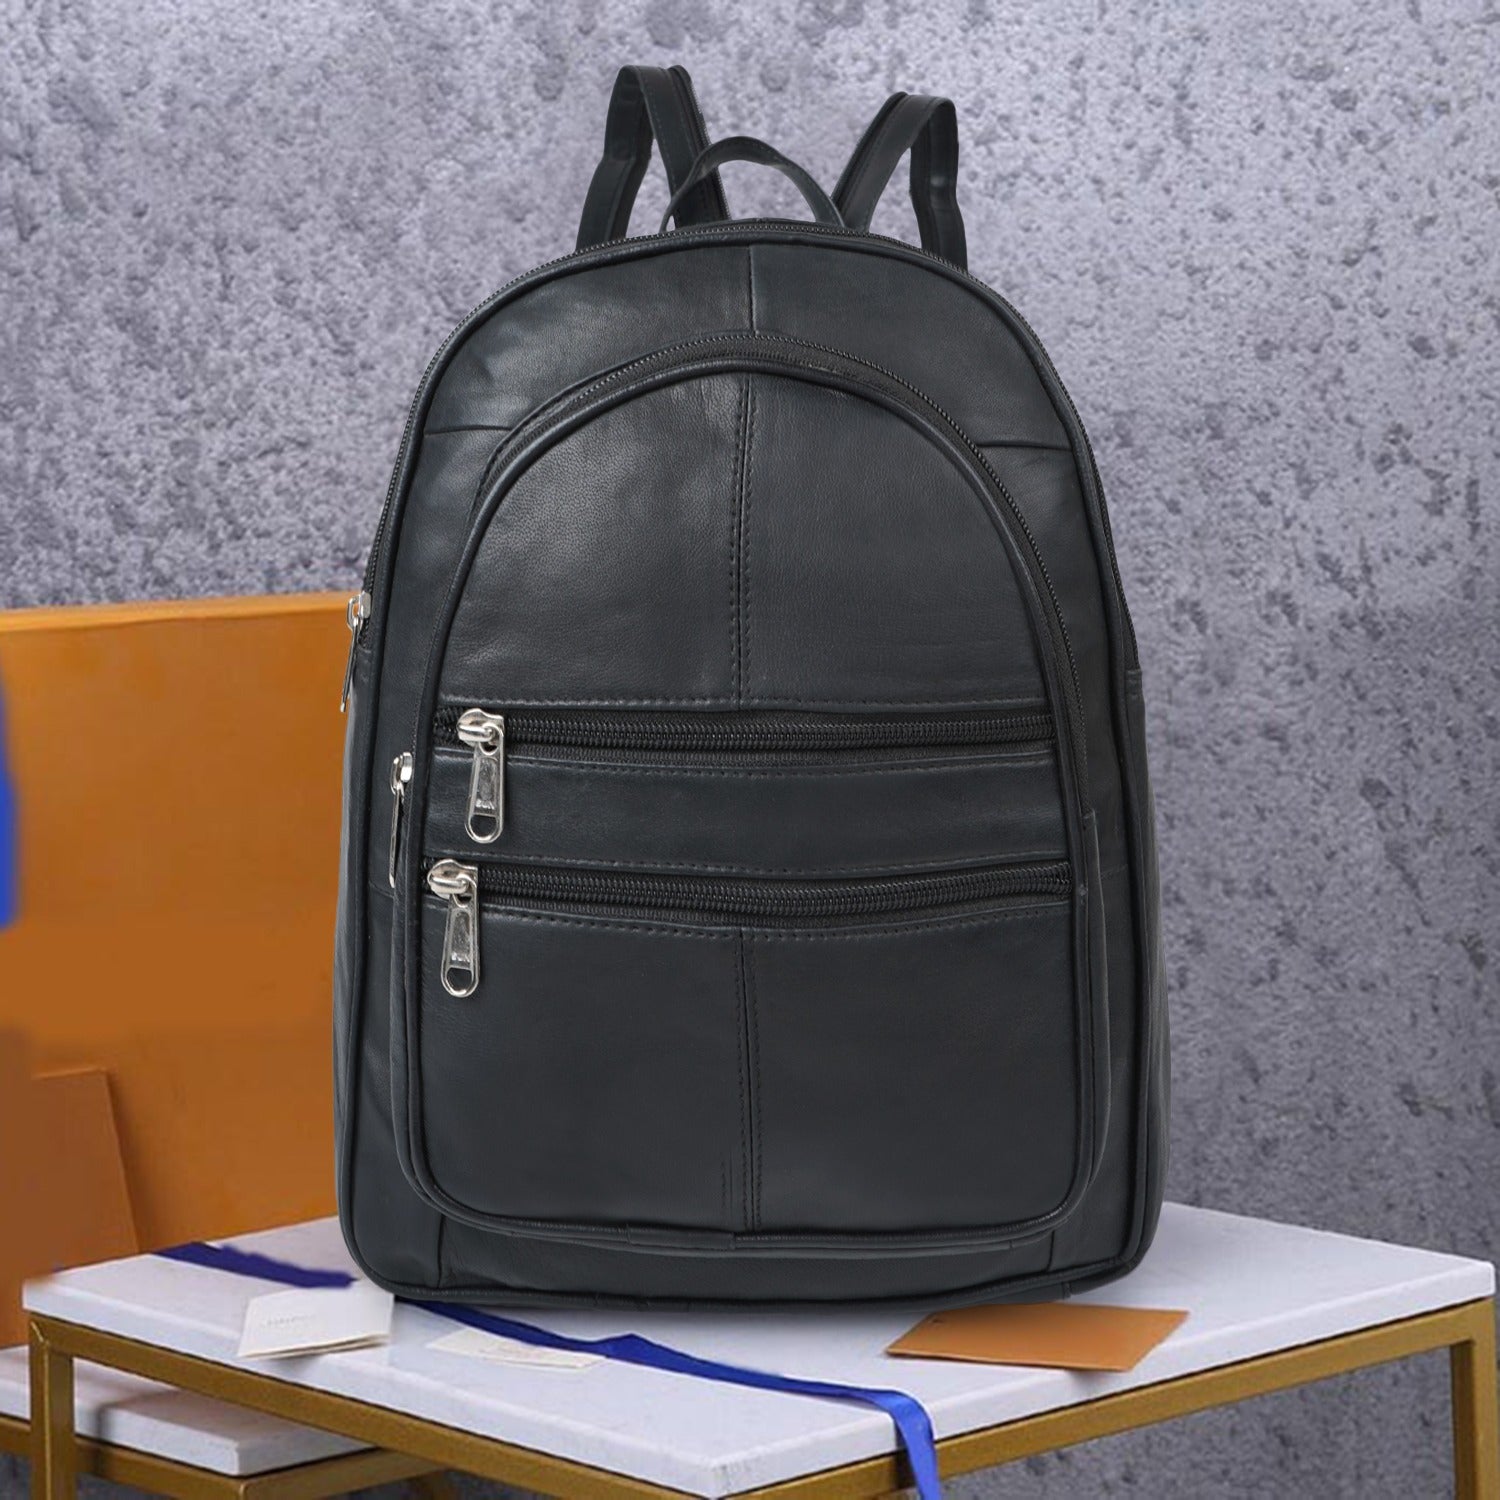 CIMONI Brand Premium Original Leather Backpack